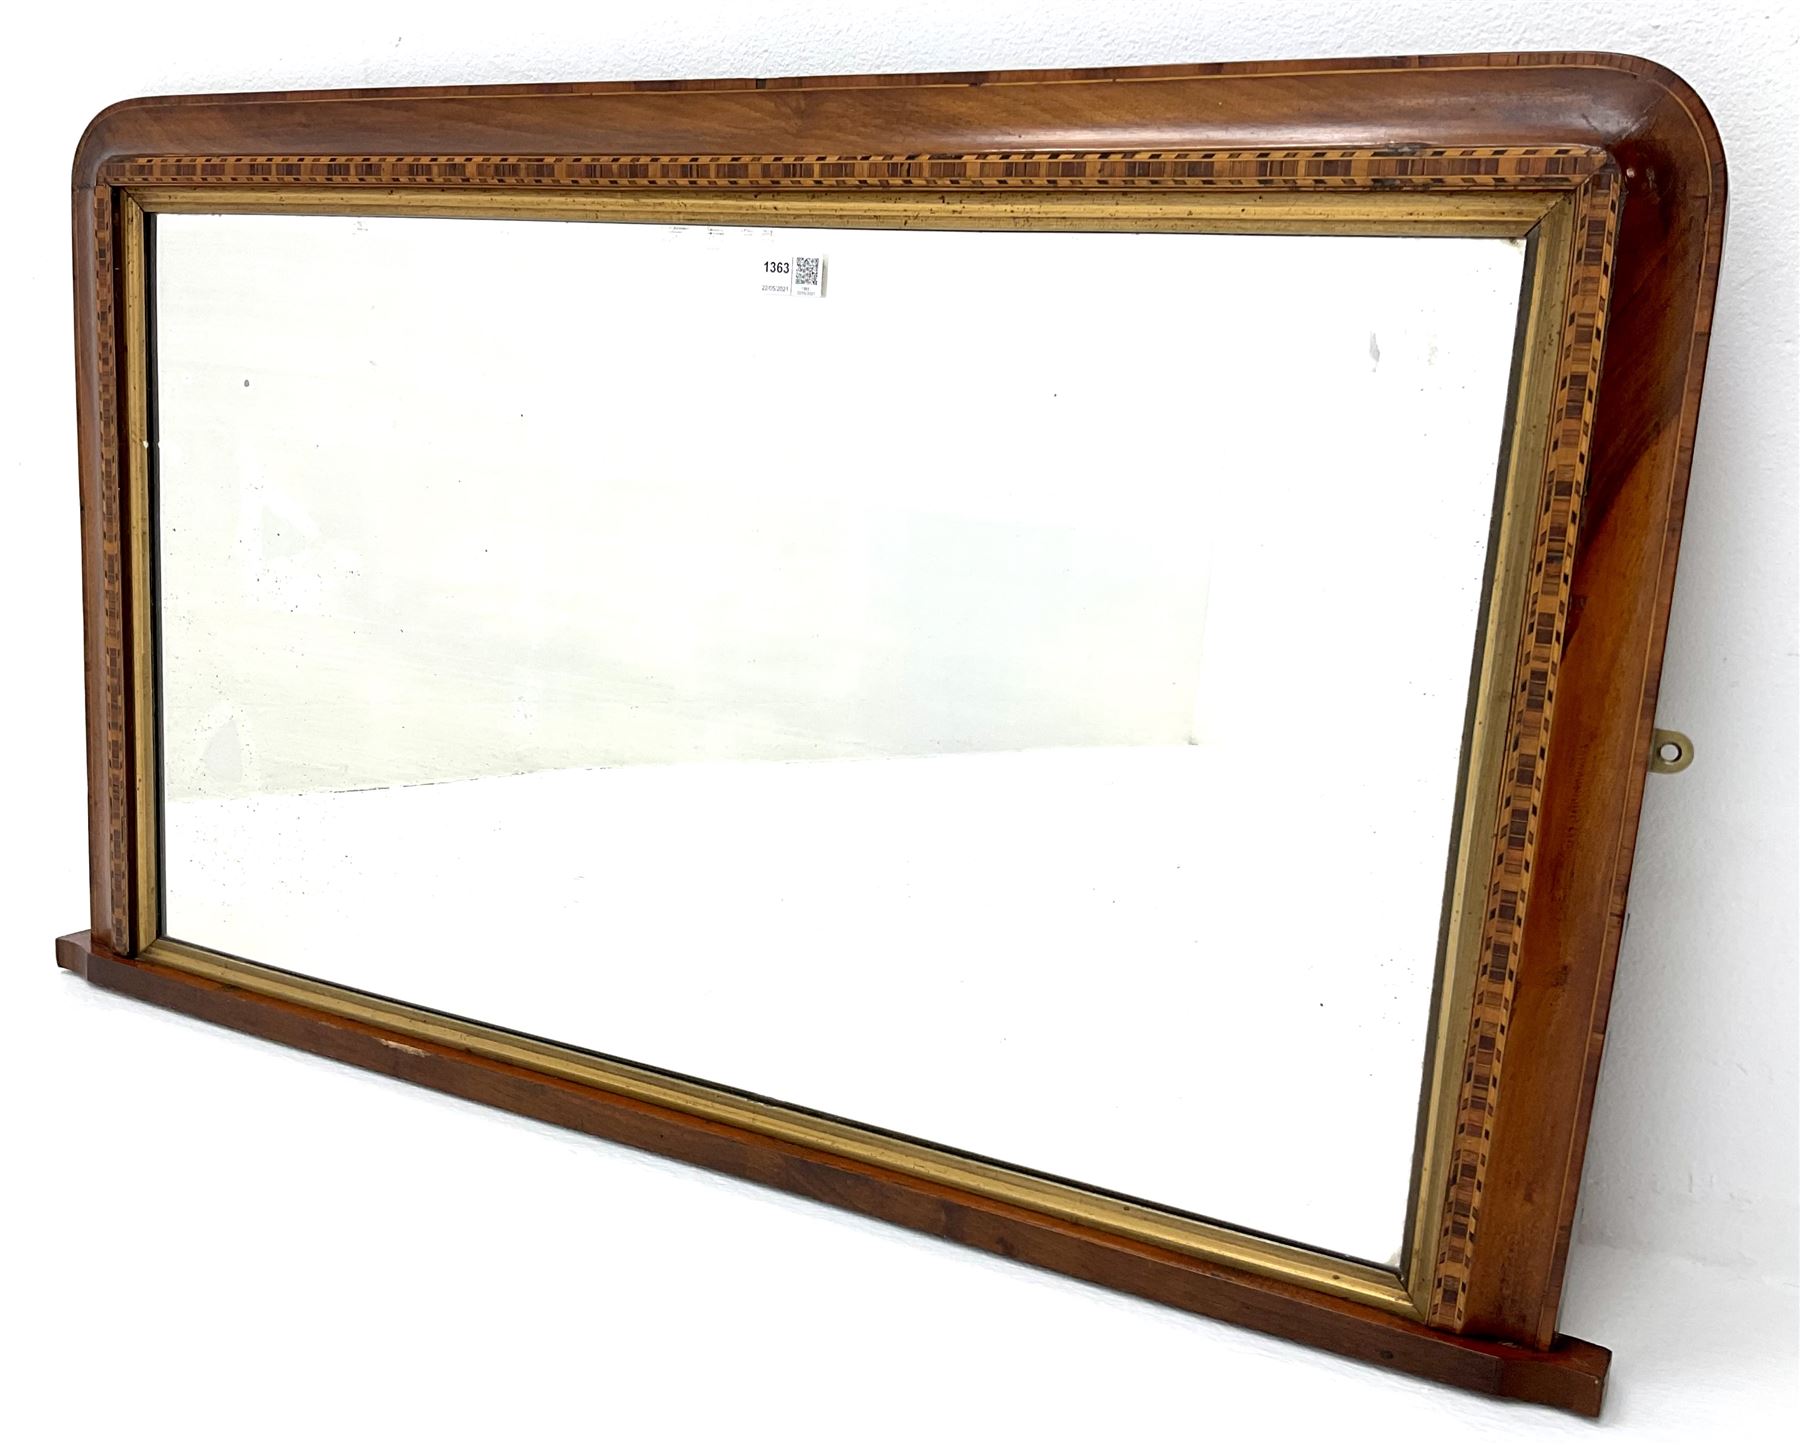 19th century cross banded and inlaid Tunbridgeware overmantle mirror